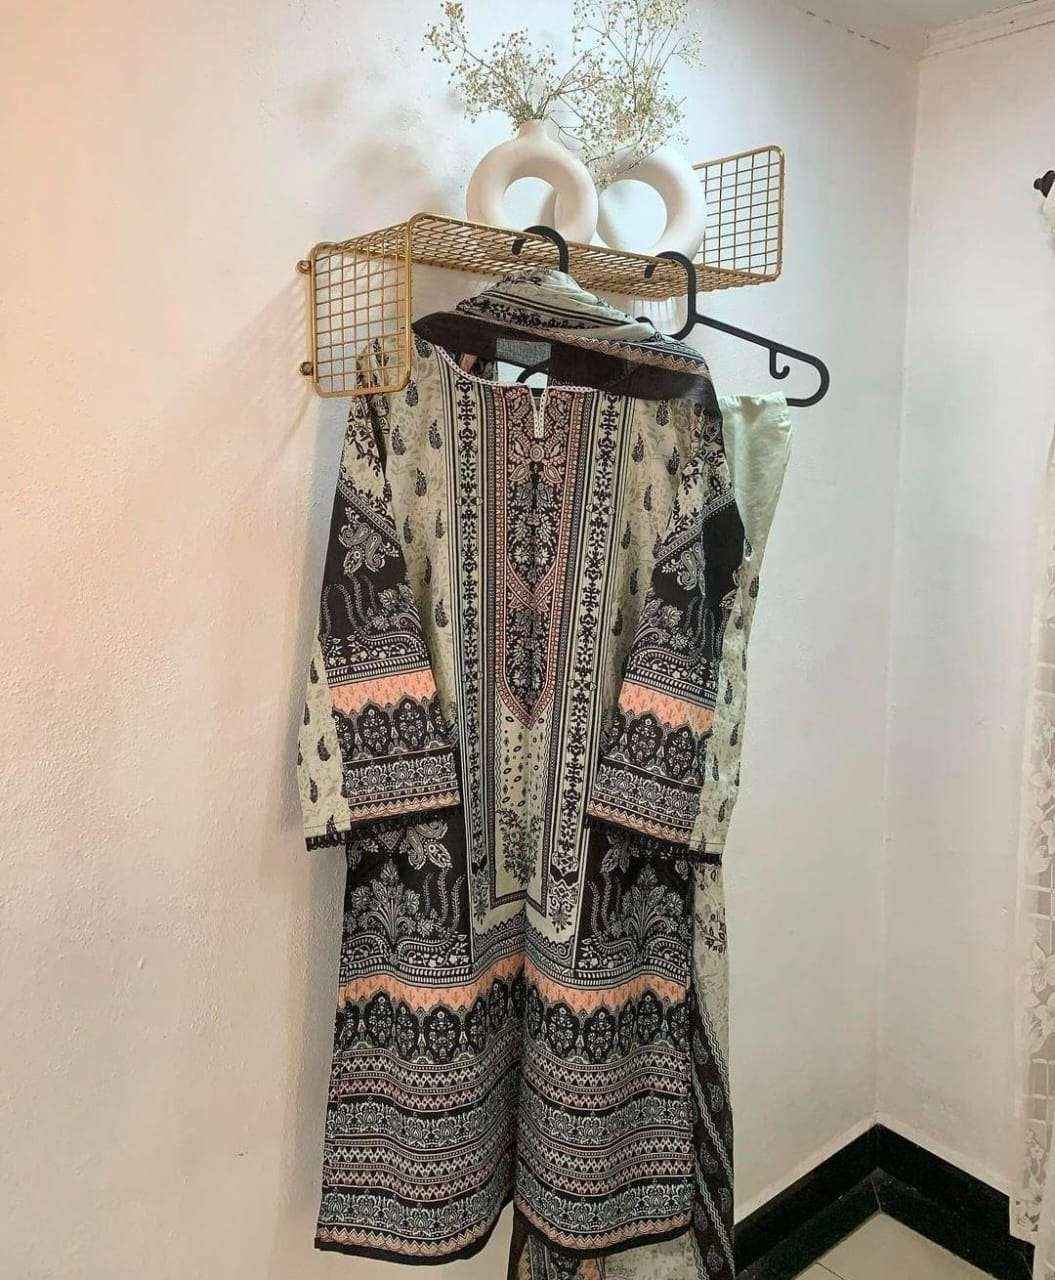 Jade Bin Saeed Heavy Cotton Luxury Collection Vol 3 Readymade Lawn Cotton Dress 6 pcs